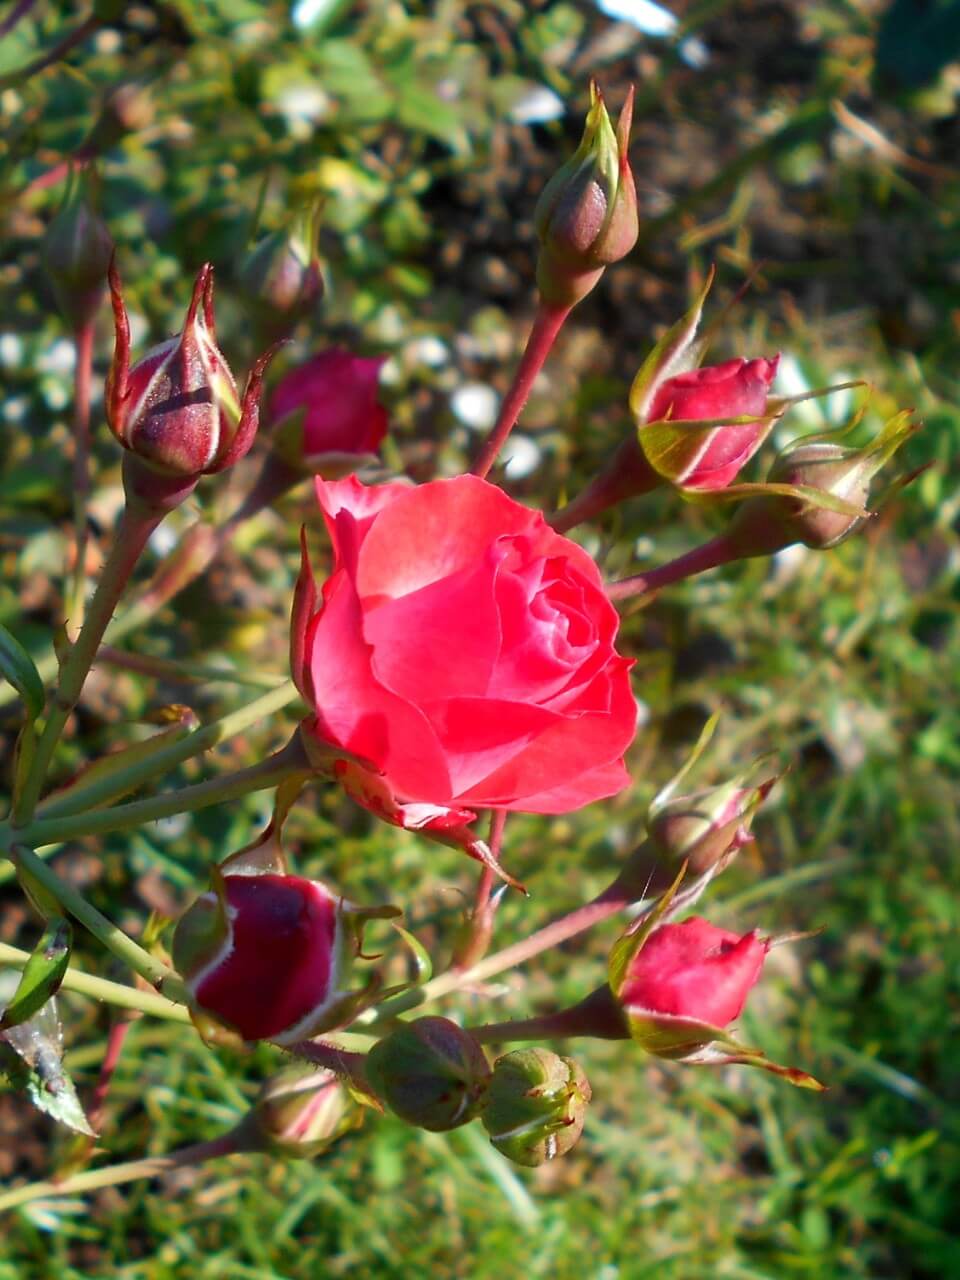 Scarlet Meidiland rose